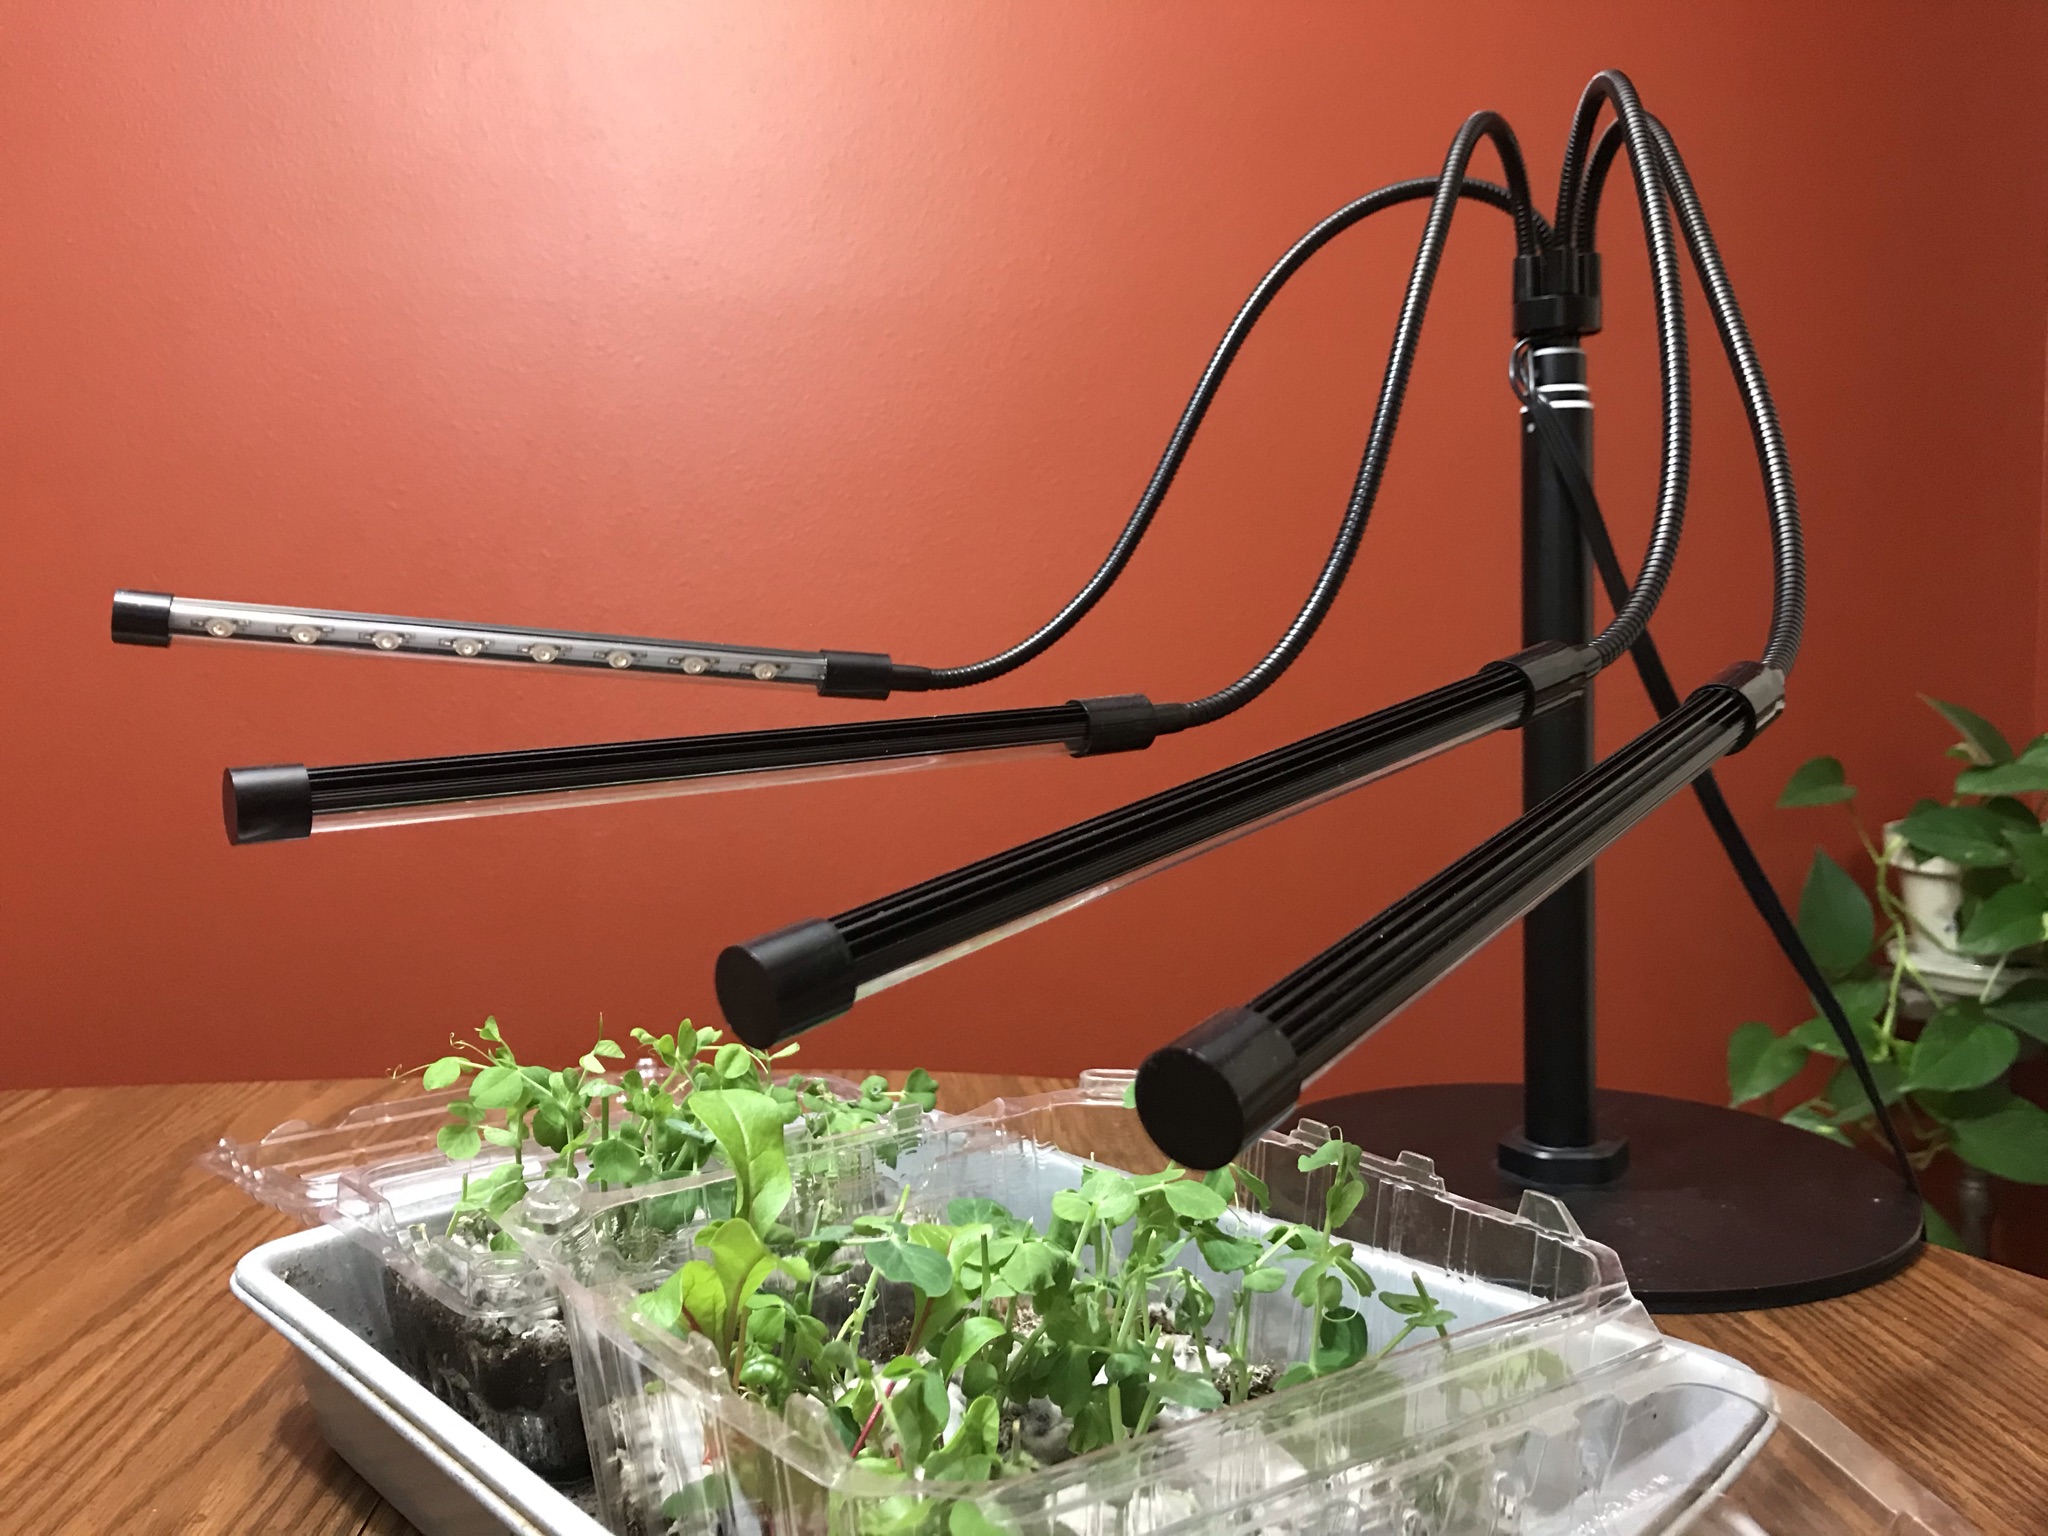 Artificial light needs to mimic sunlight to grow sturdy seedlings. (NDSU photo